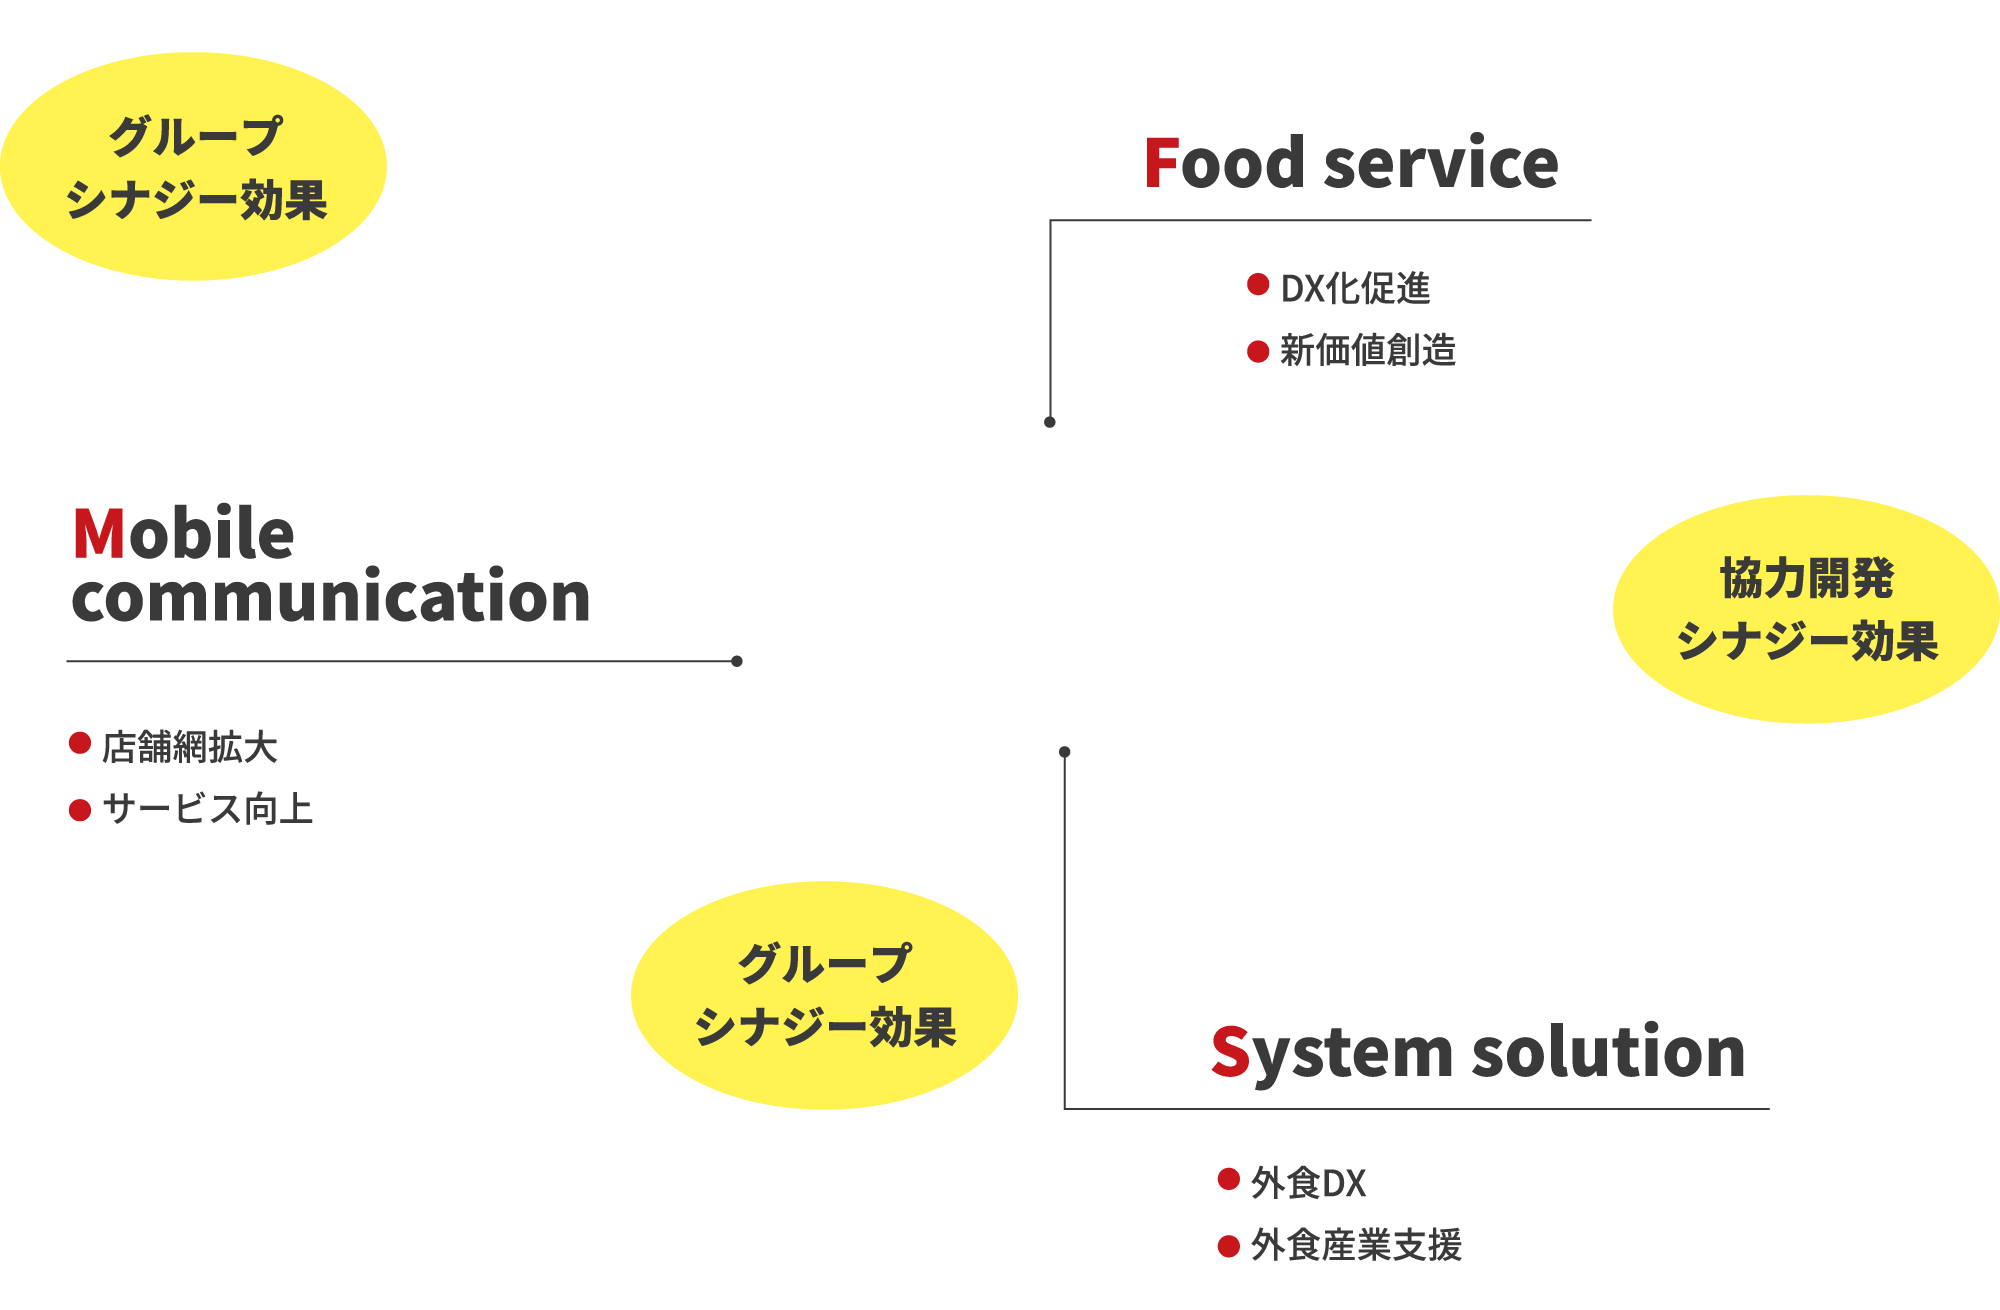 【Mobile communication】店舗網拡大、サービス向上【Food service】DX化促進、新価値創造【System solution】外食DX、外食産業支援